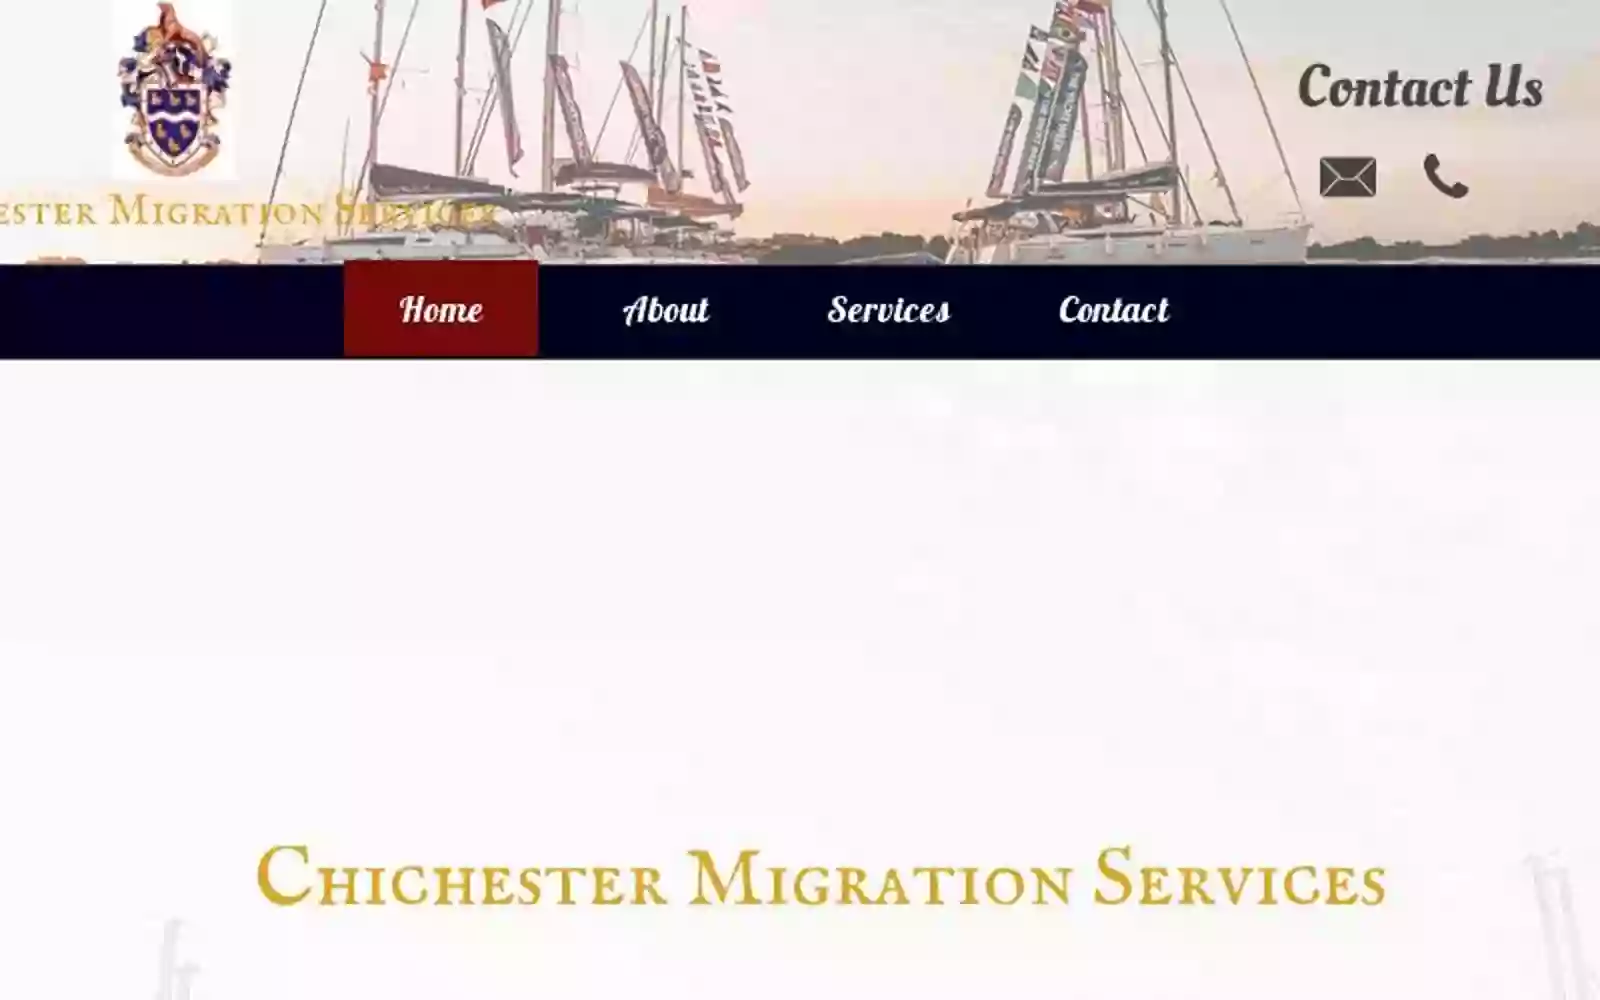 Chichester Migration Services